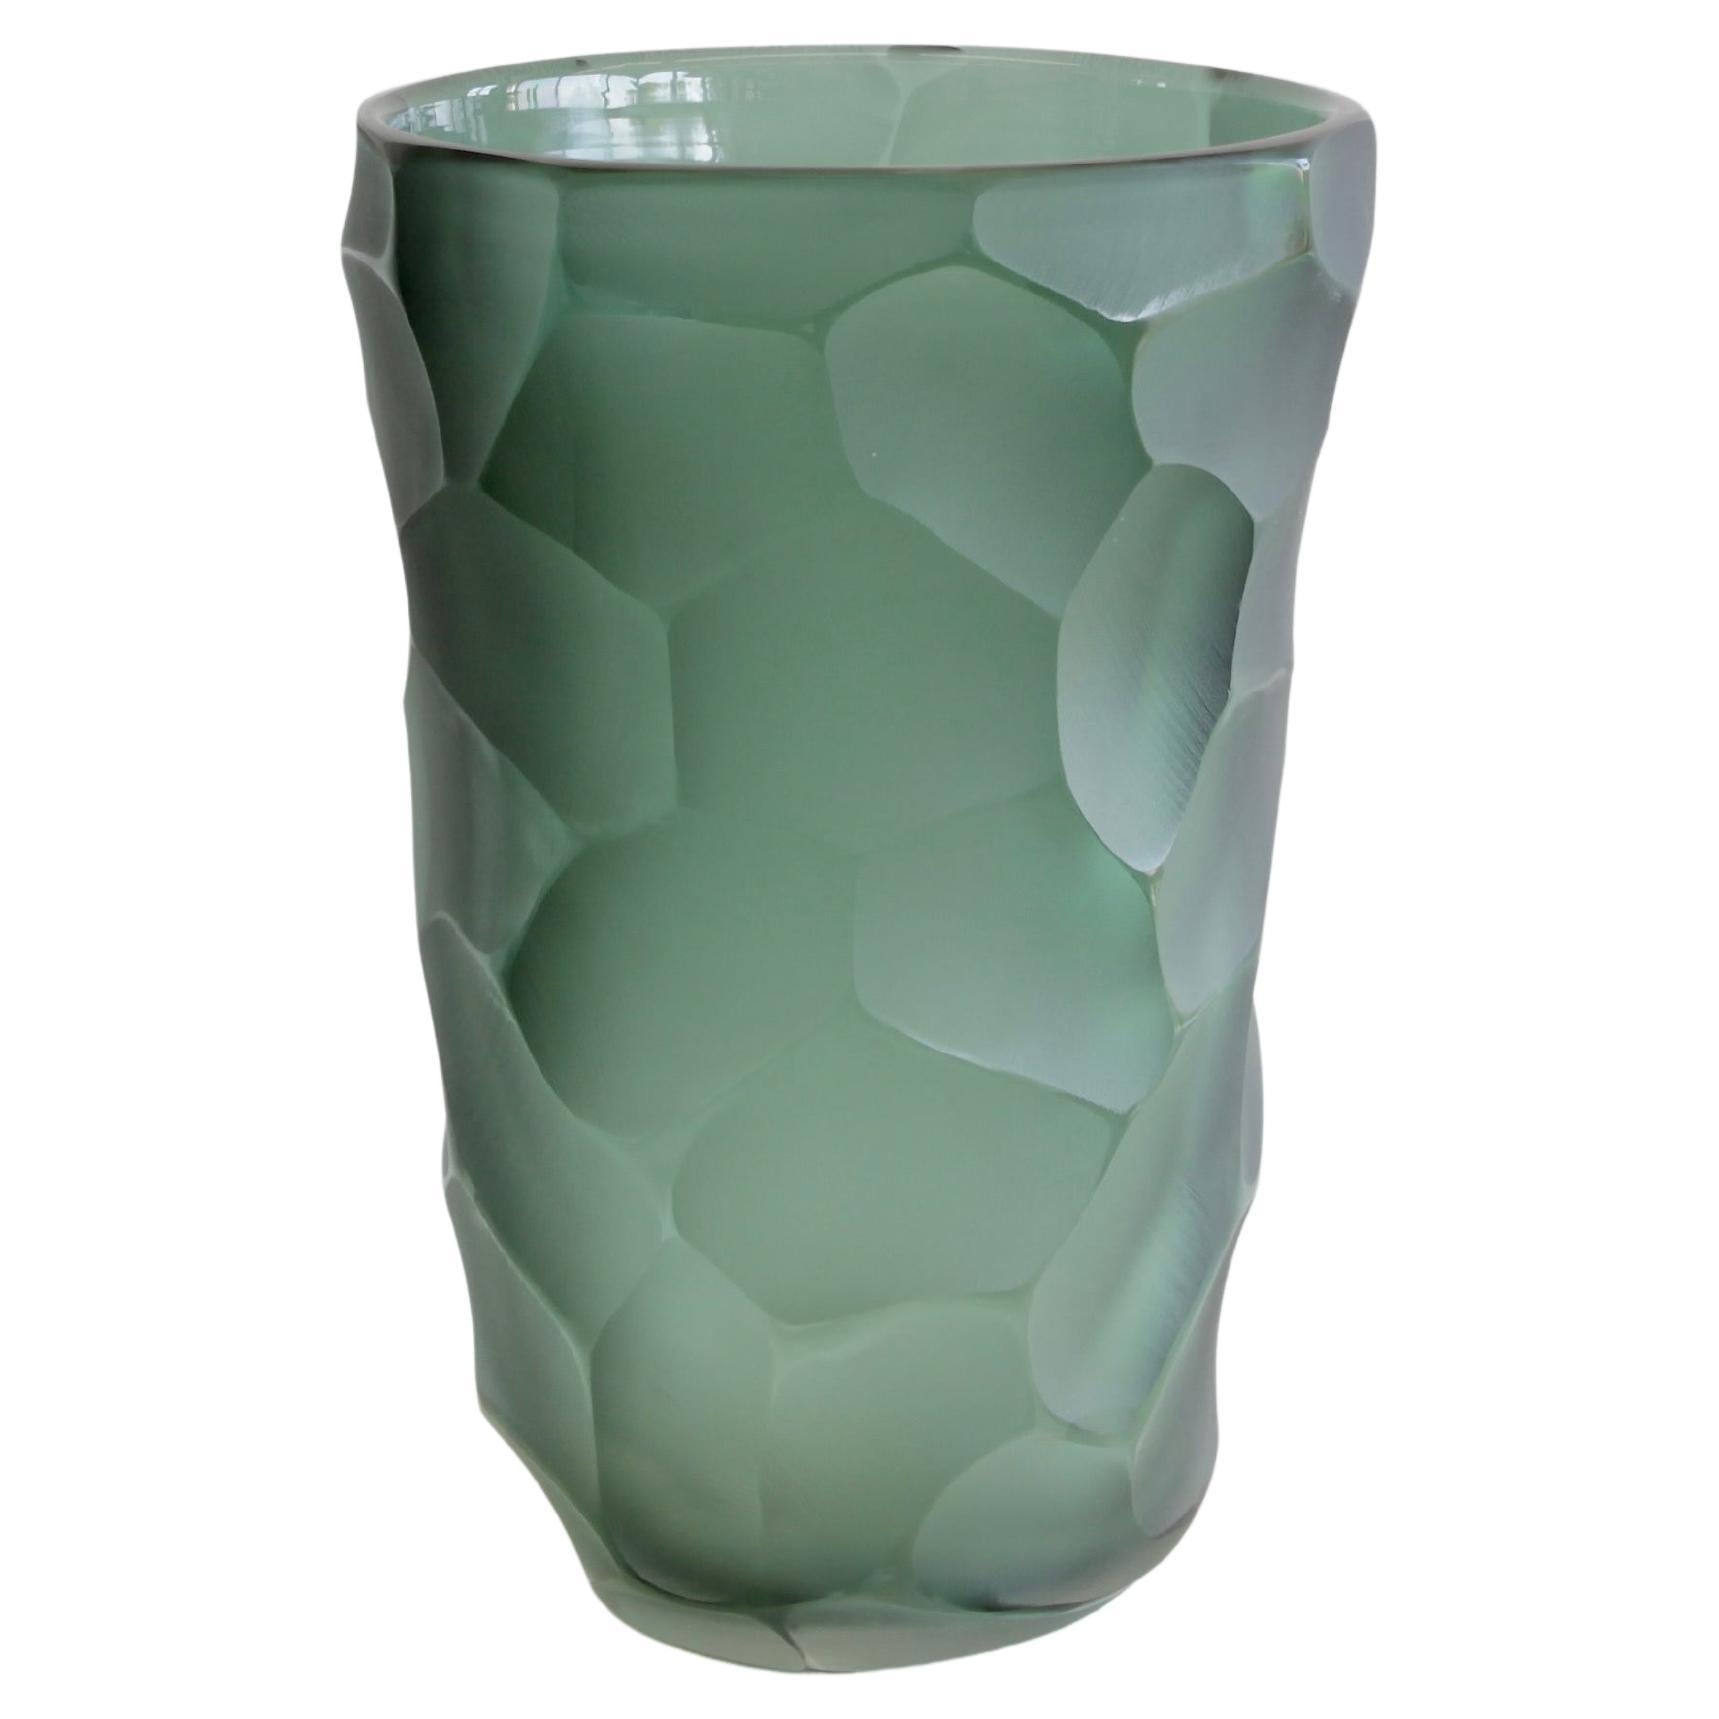 Signed Murano Glass Vase, Italy 'Green'